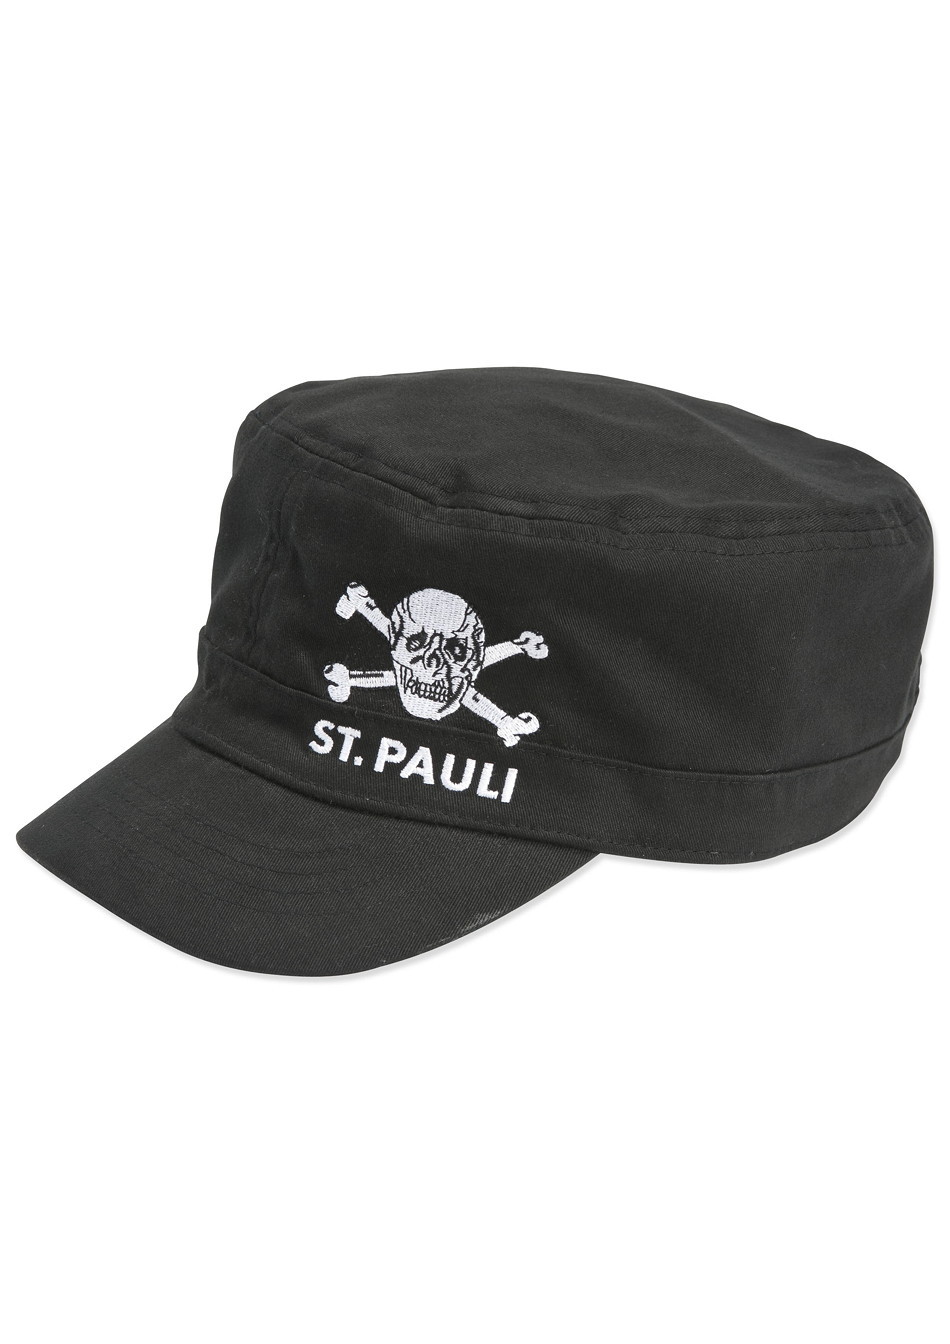 Skull and crossbones army cap